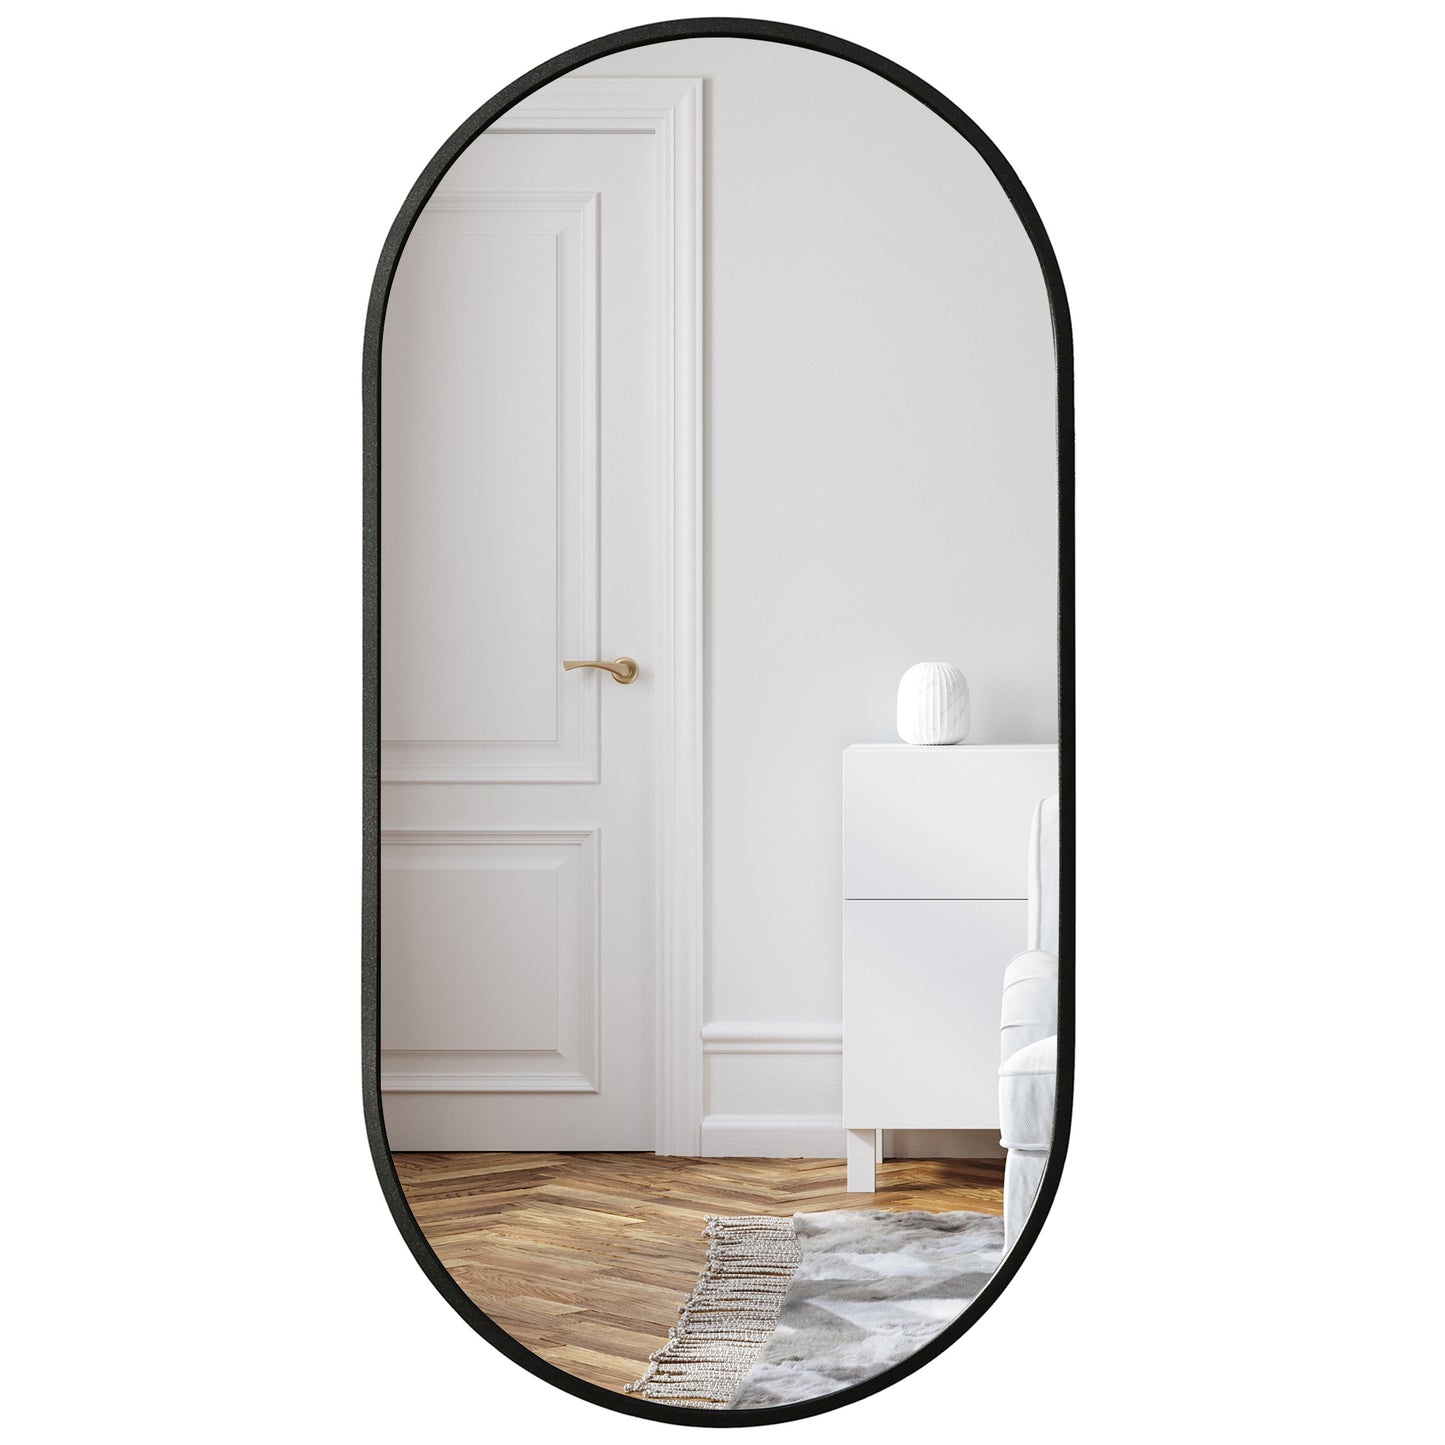 Oval Mirror - Aluminum Framed Oval Bathroom Mirror, Living Room Mirror, Bedroom - Large Oval Mirror with Vertical Mount